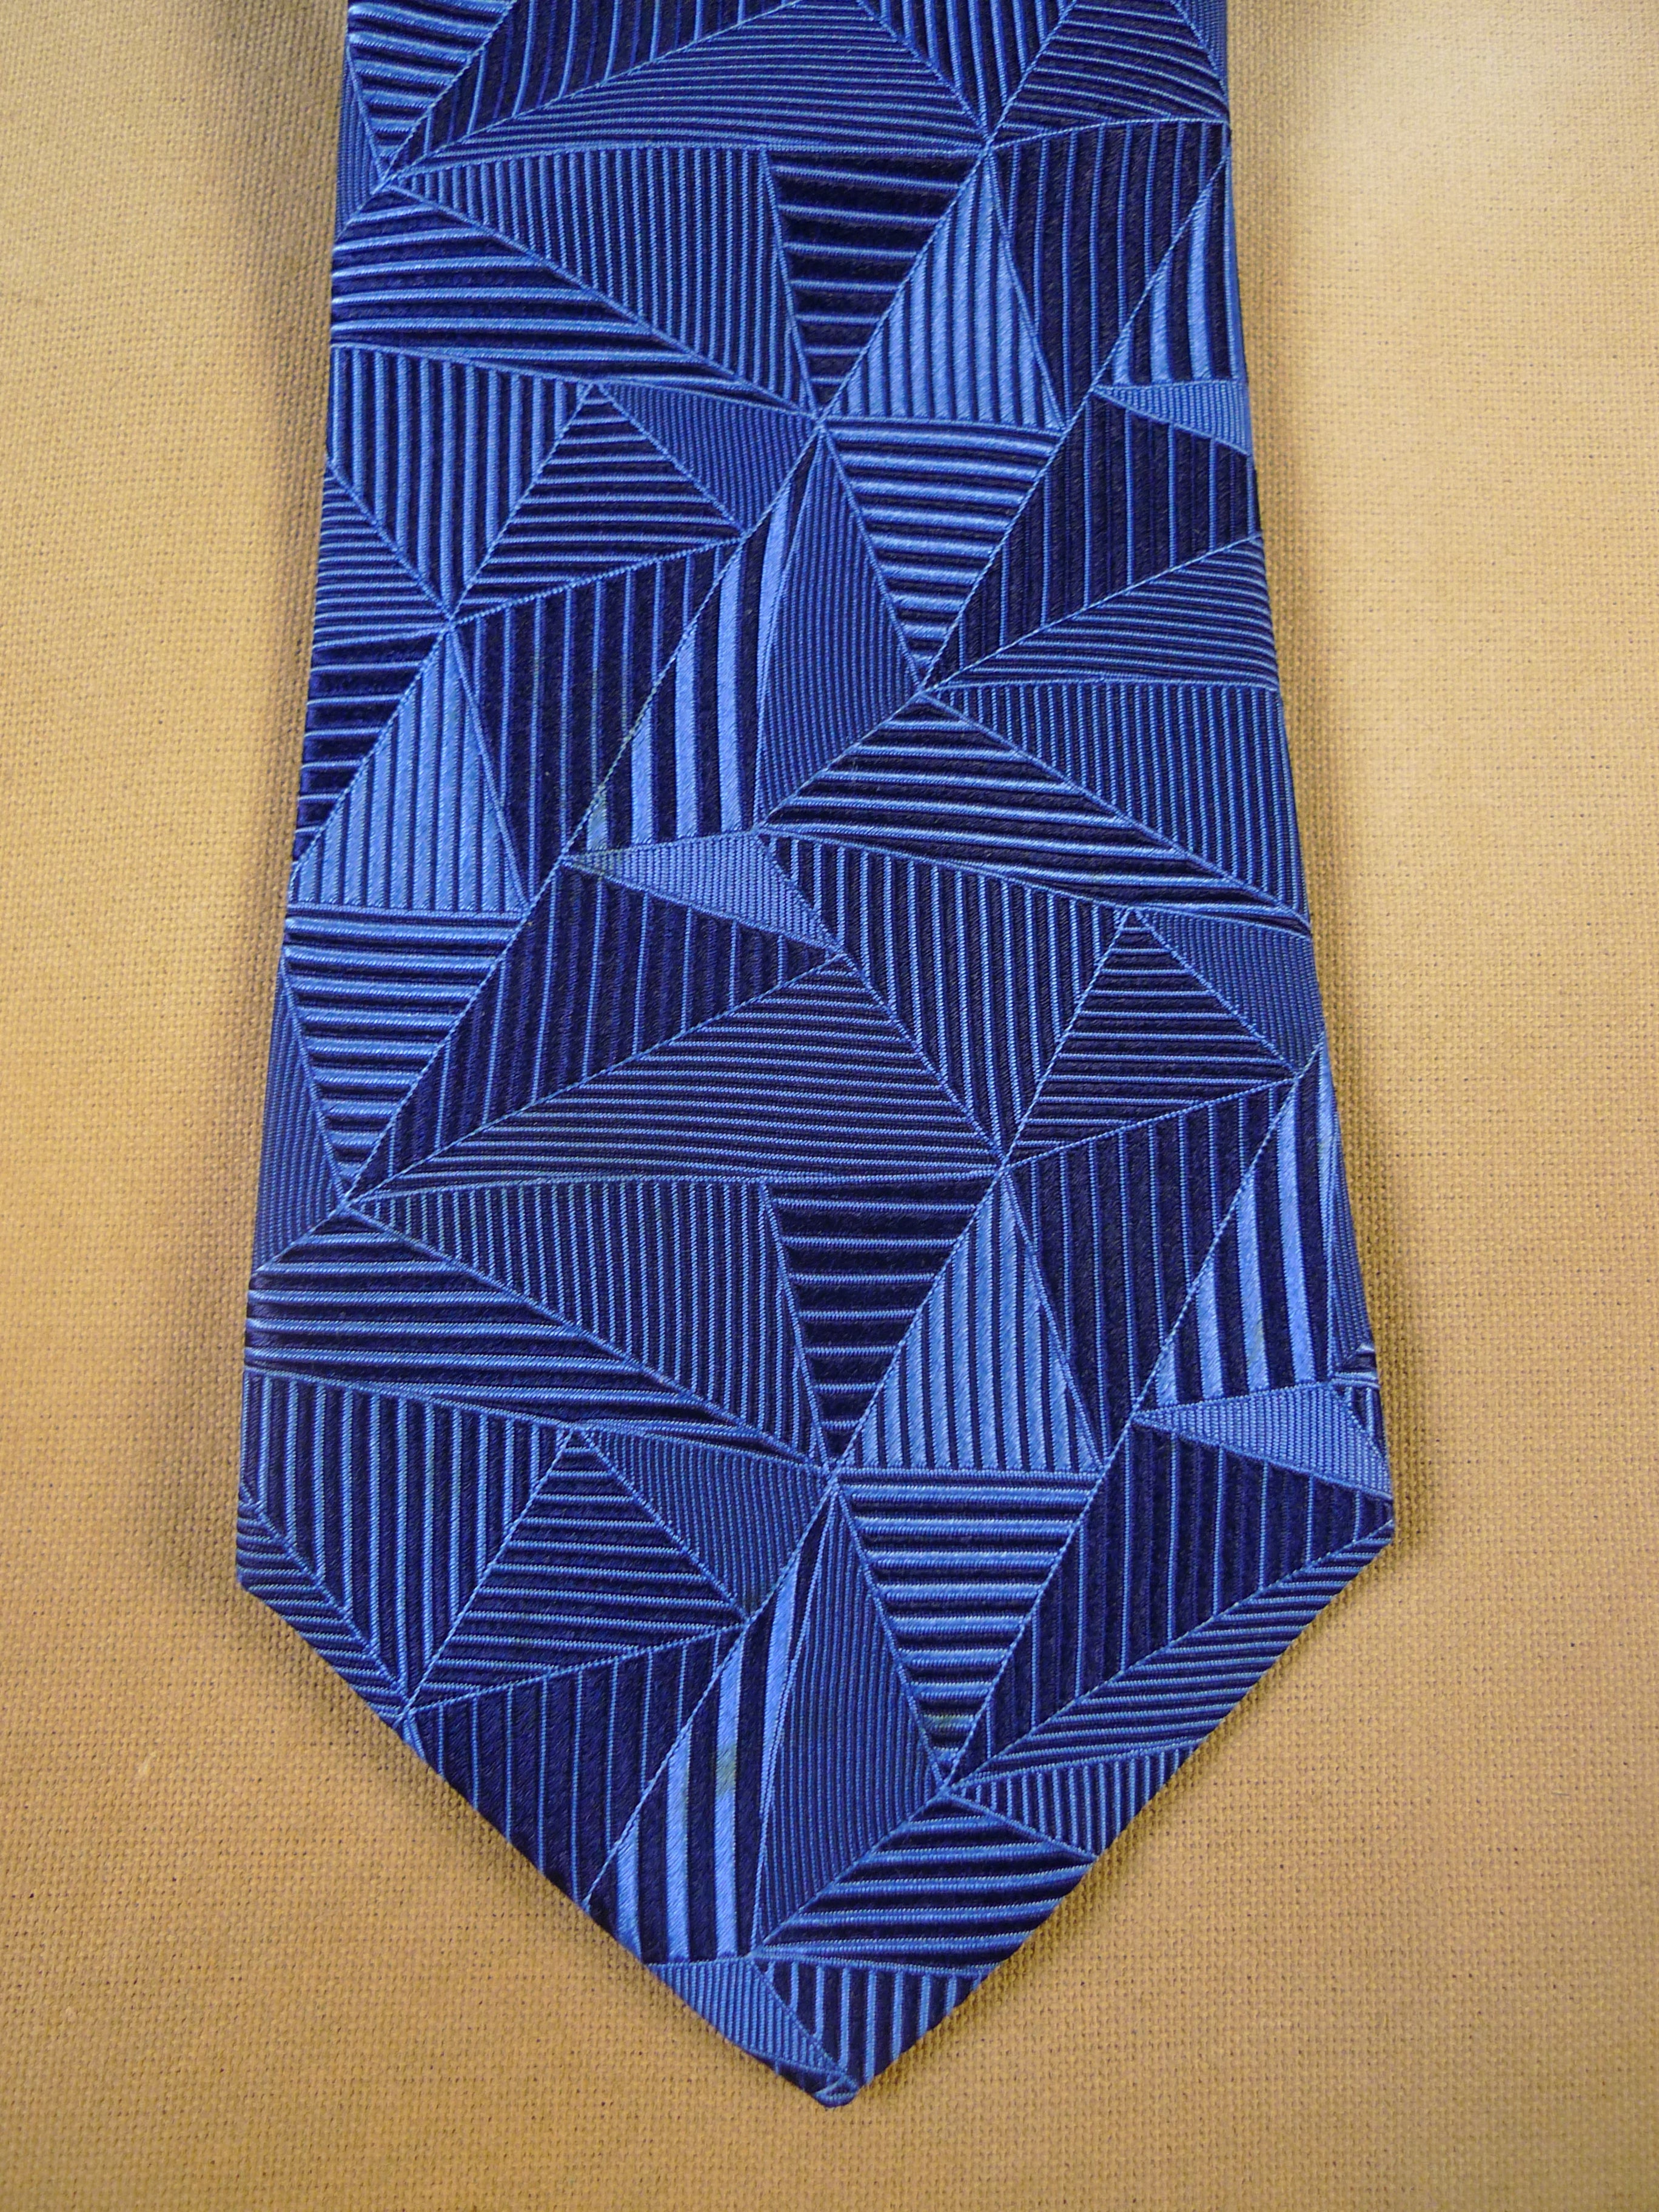 24/0105 immaculate turnbull & asser blue 100% silk tie